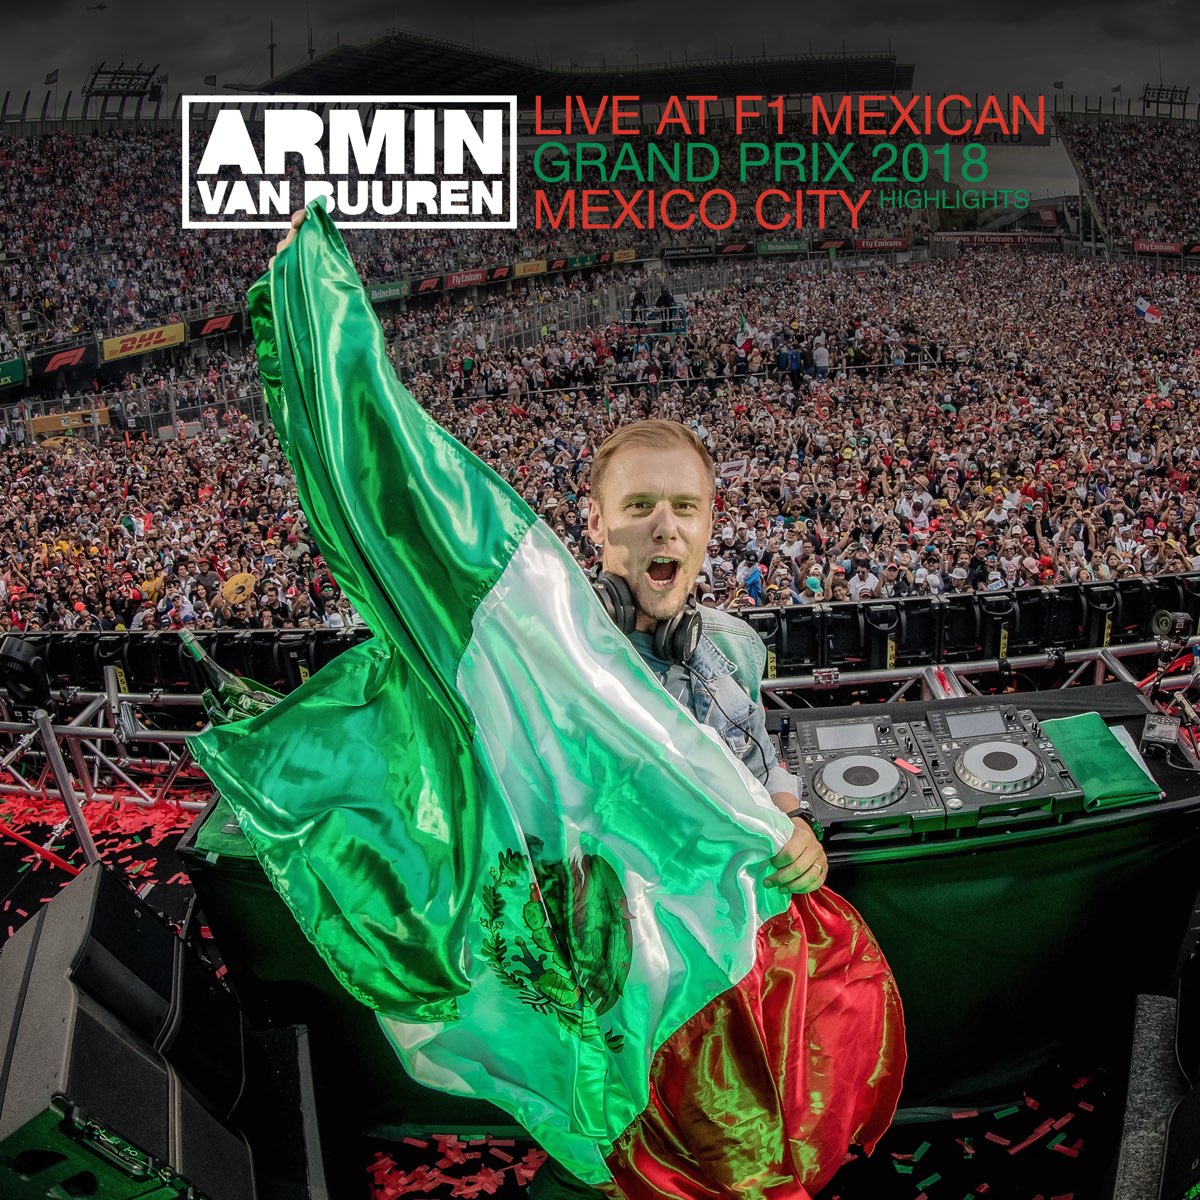 Live at F1 Mexican Grand Prix 2018 (Mexico City, Mexico) Highlights - Album by Armin van Buuren